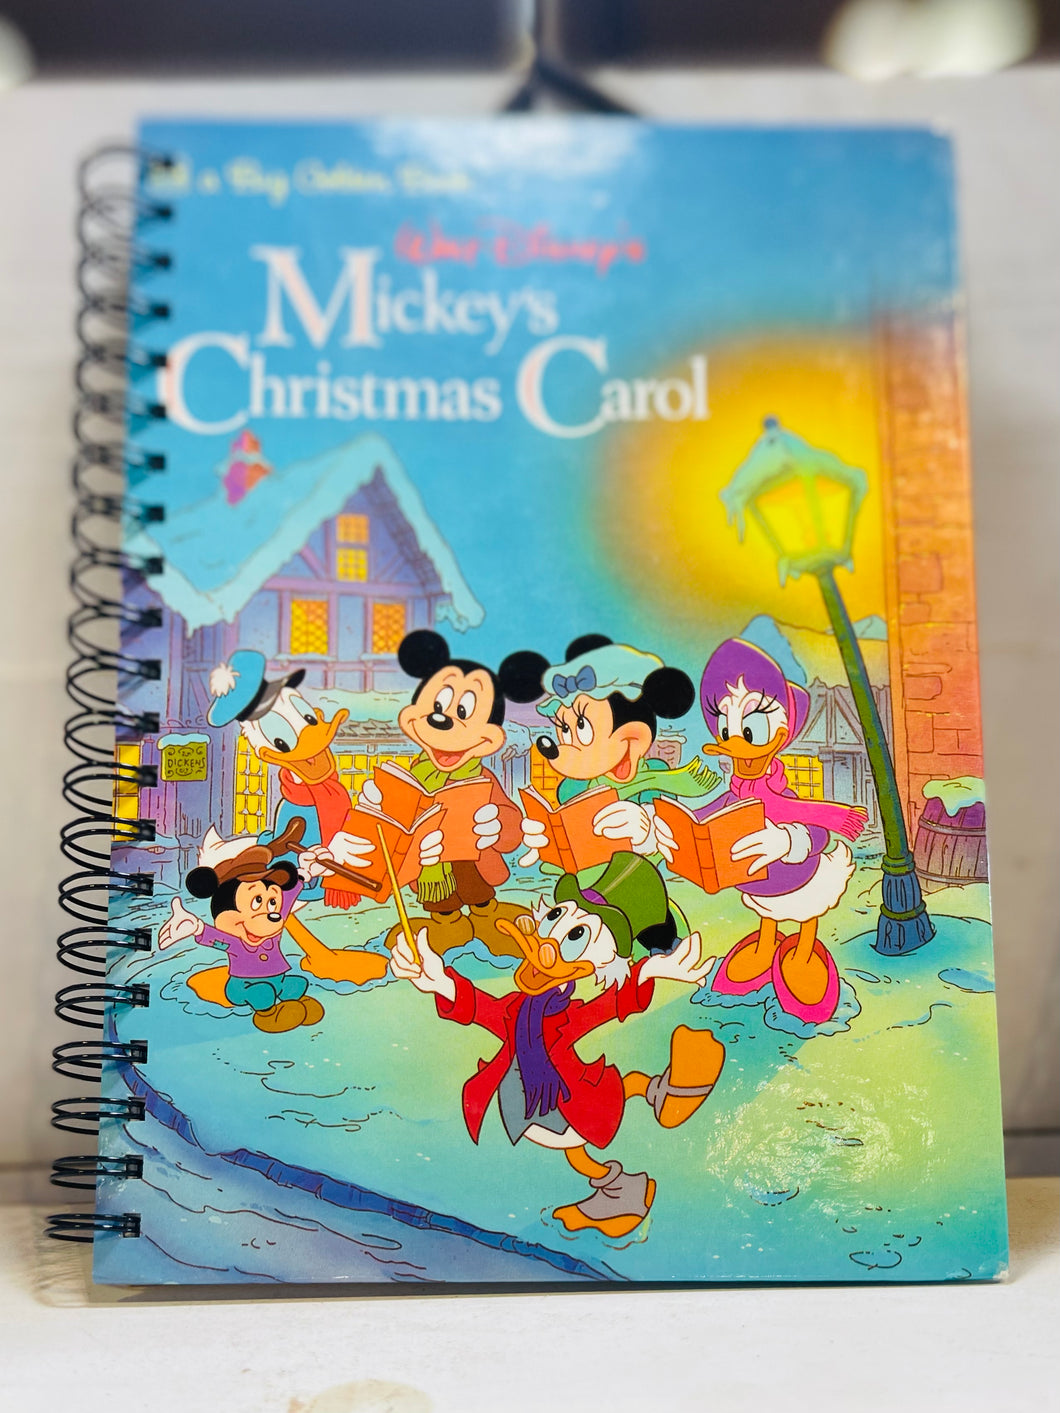 Mickeys Christmas Carol